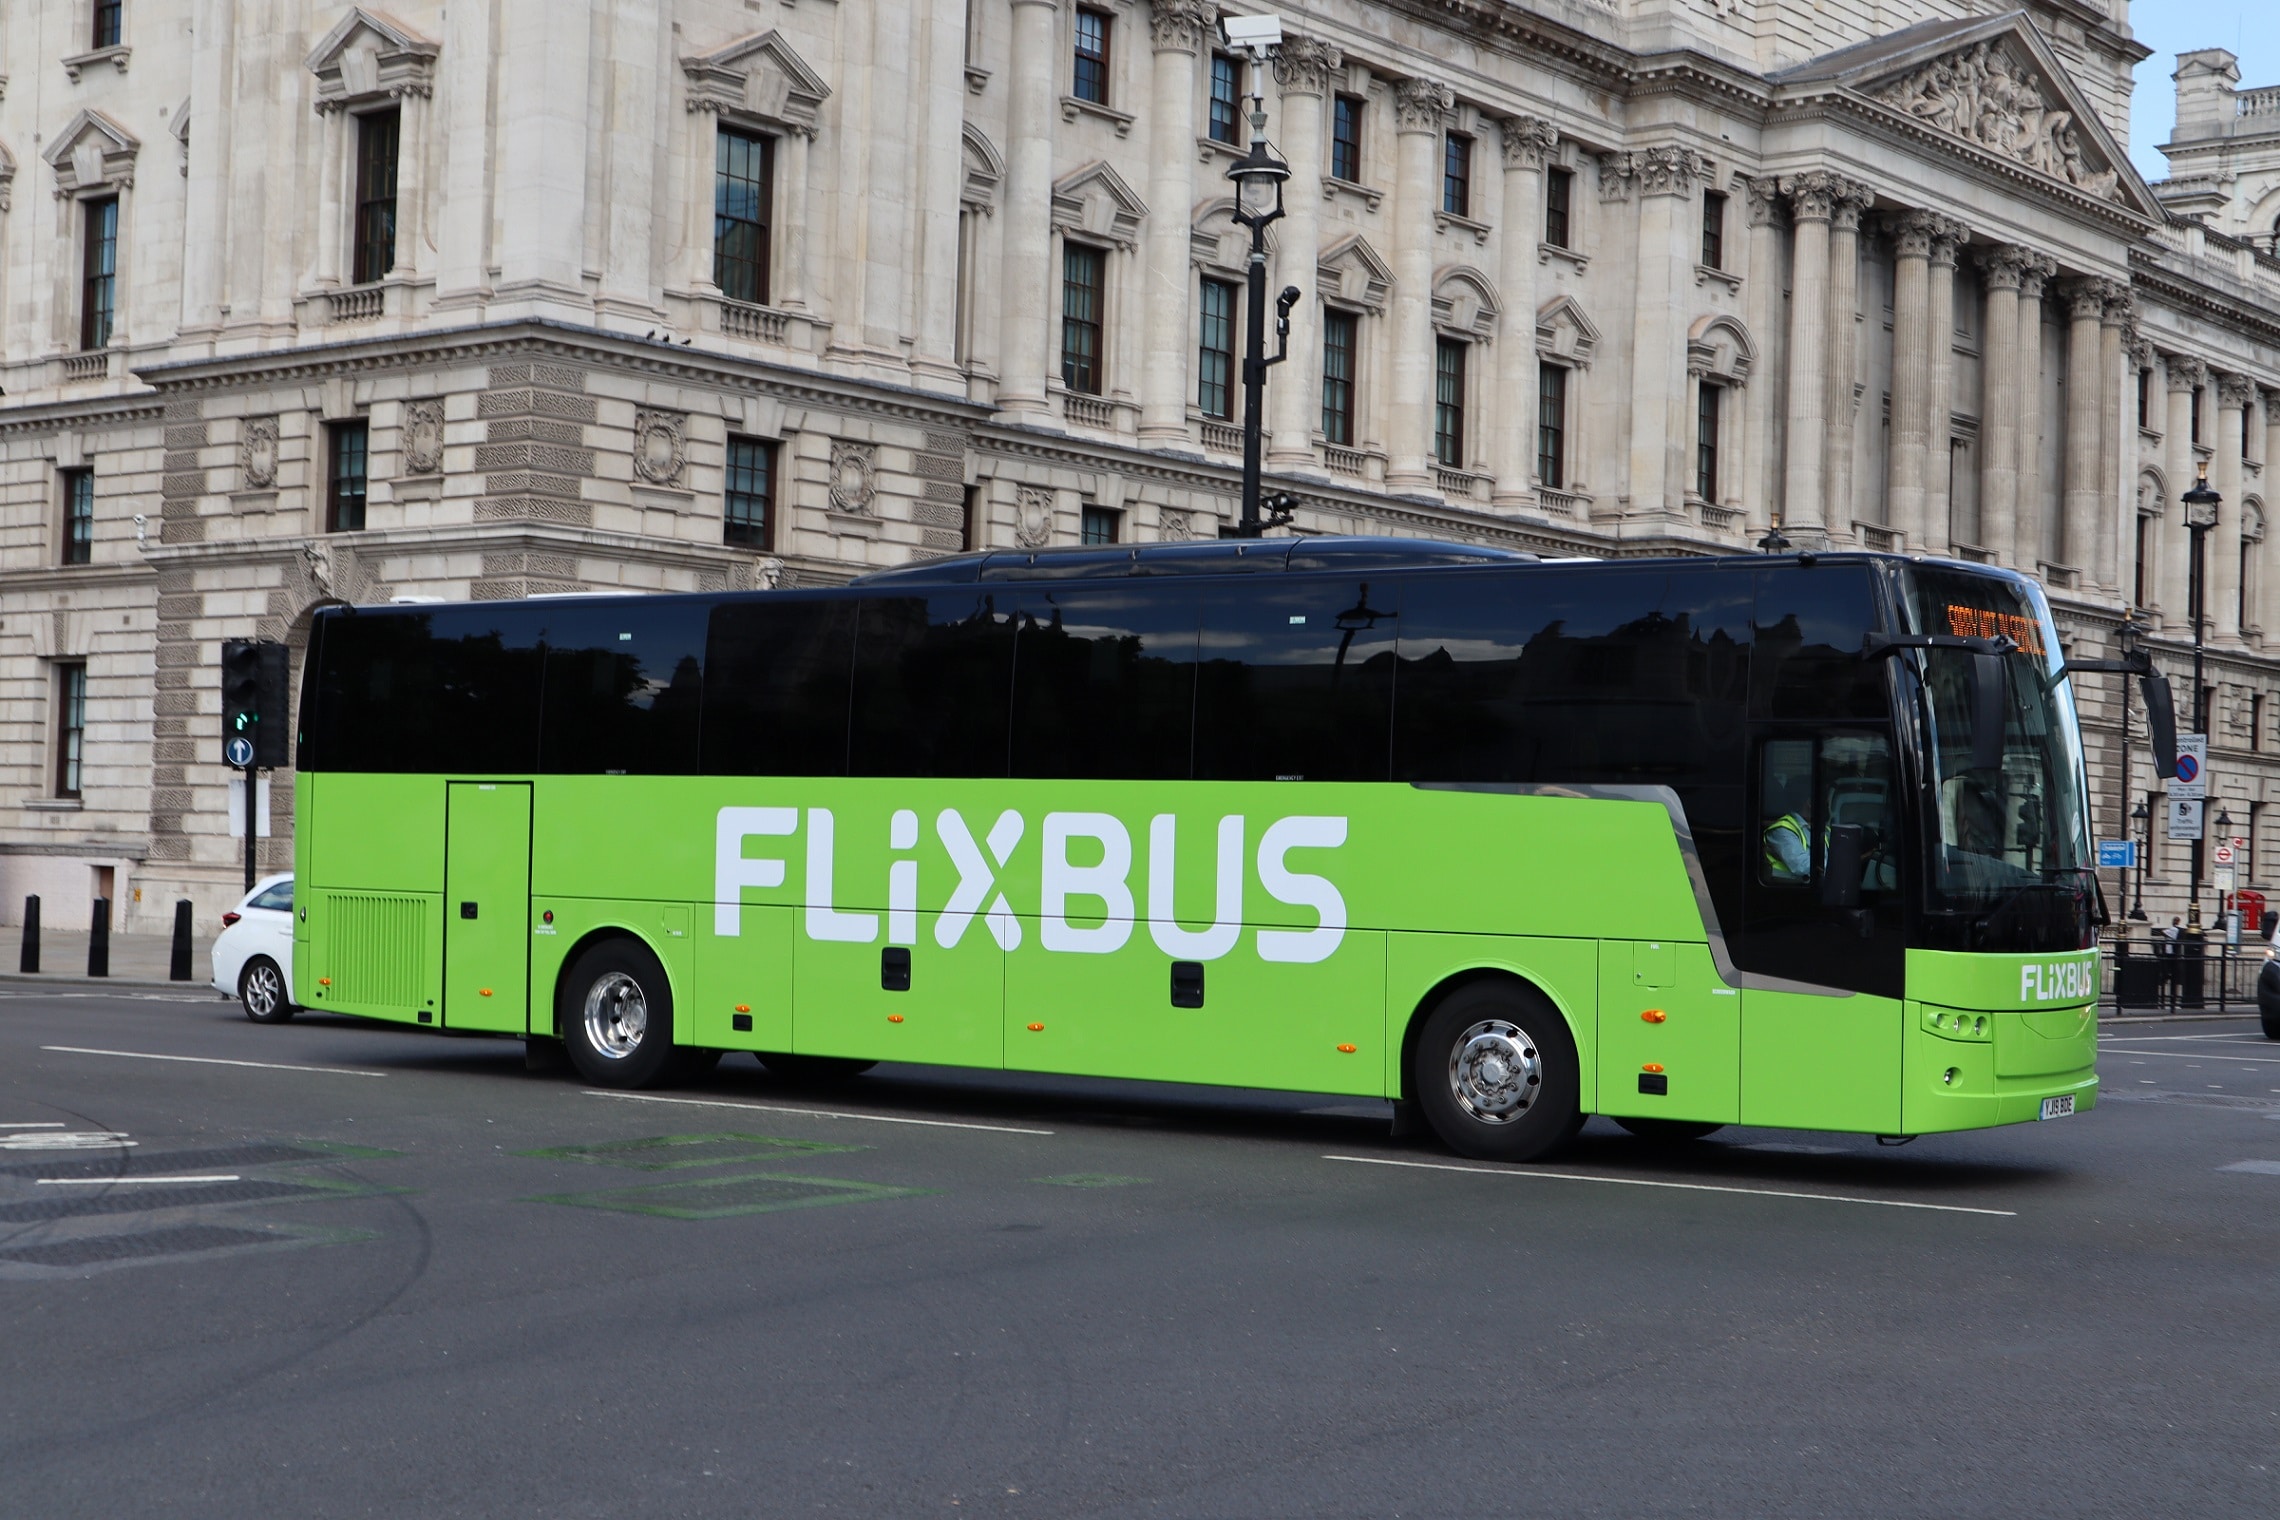 FlixBus UK growth plans ahead of trajectory